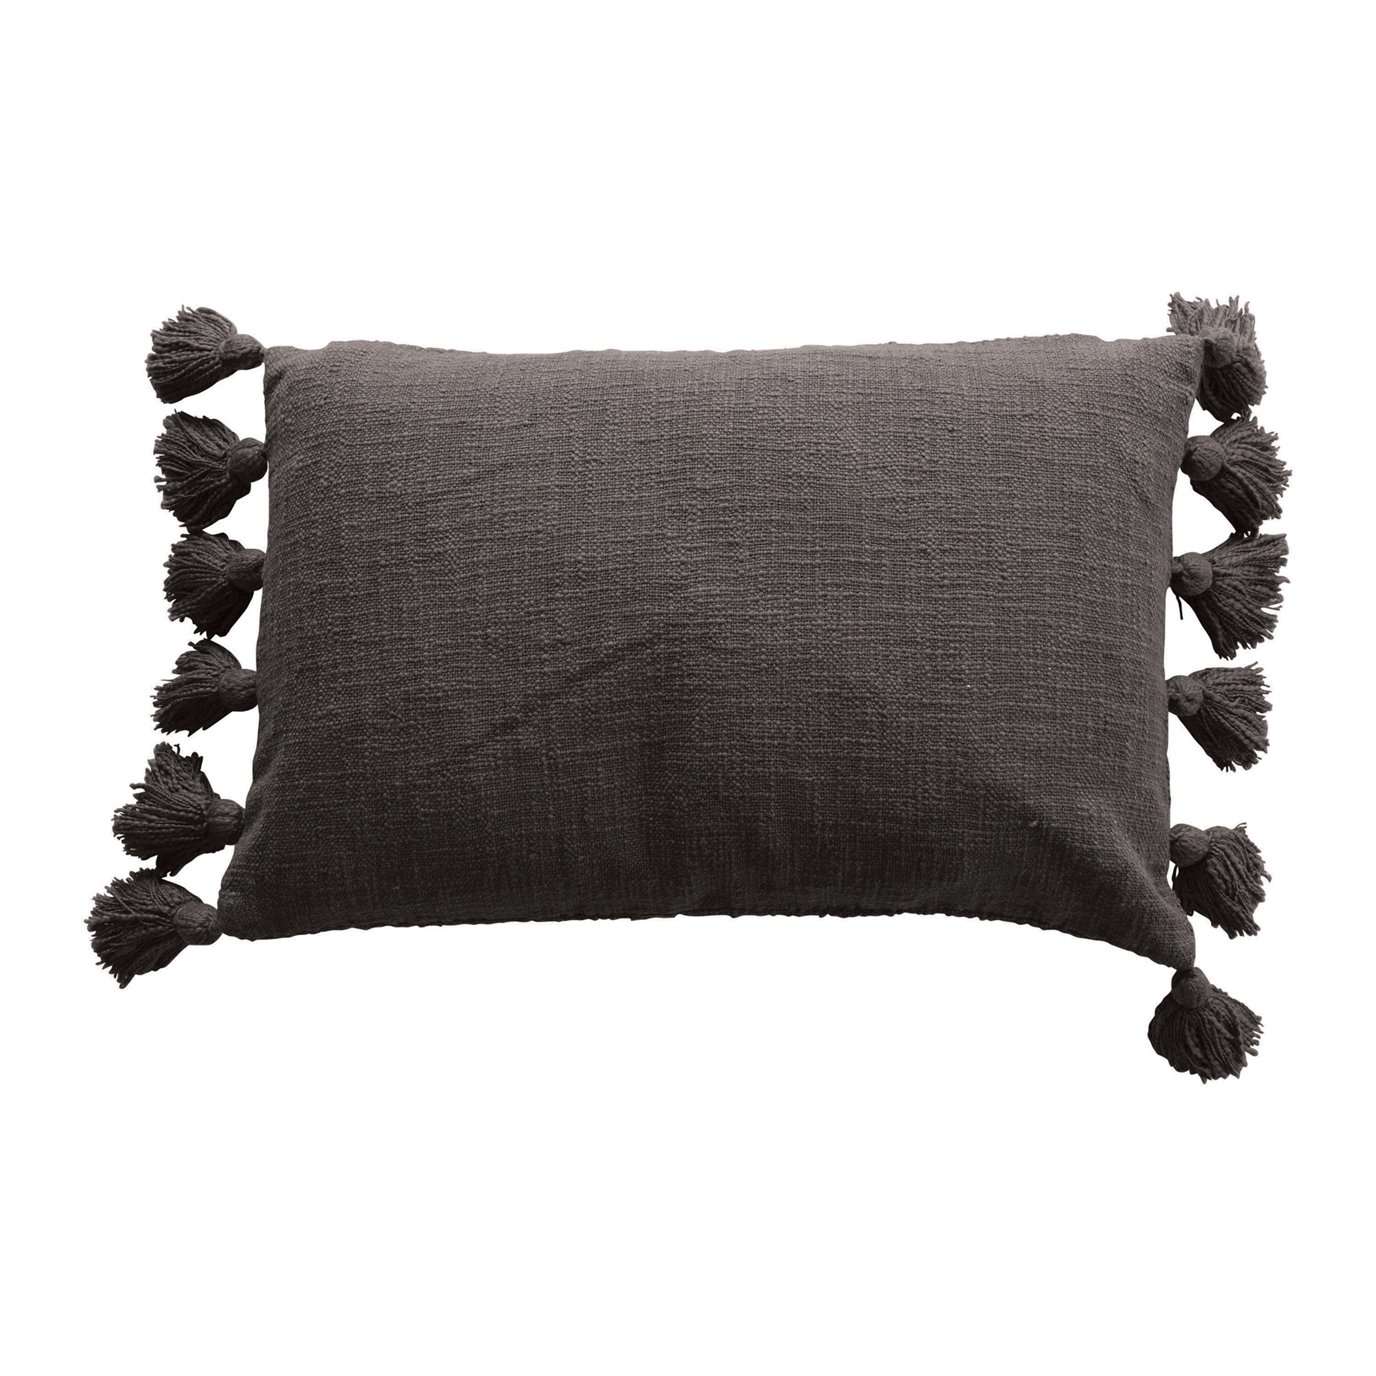 Cotton Slub Lumbar Pillow with Tassels, Iron Color